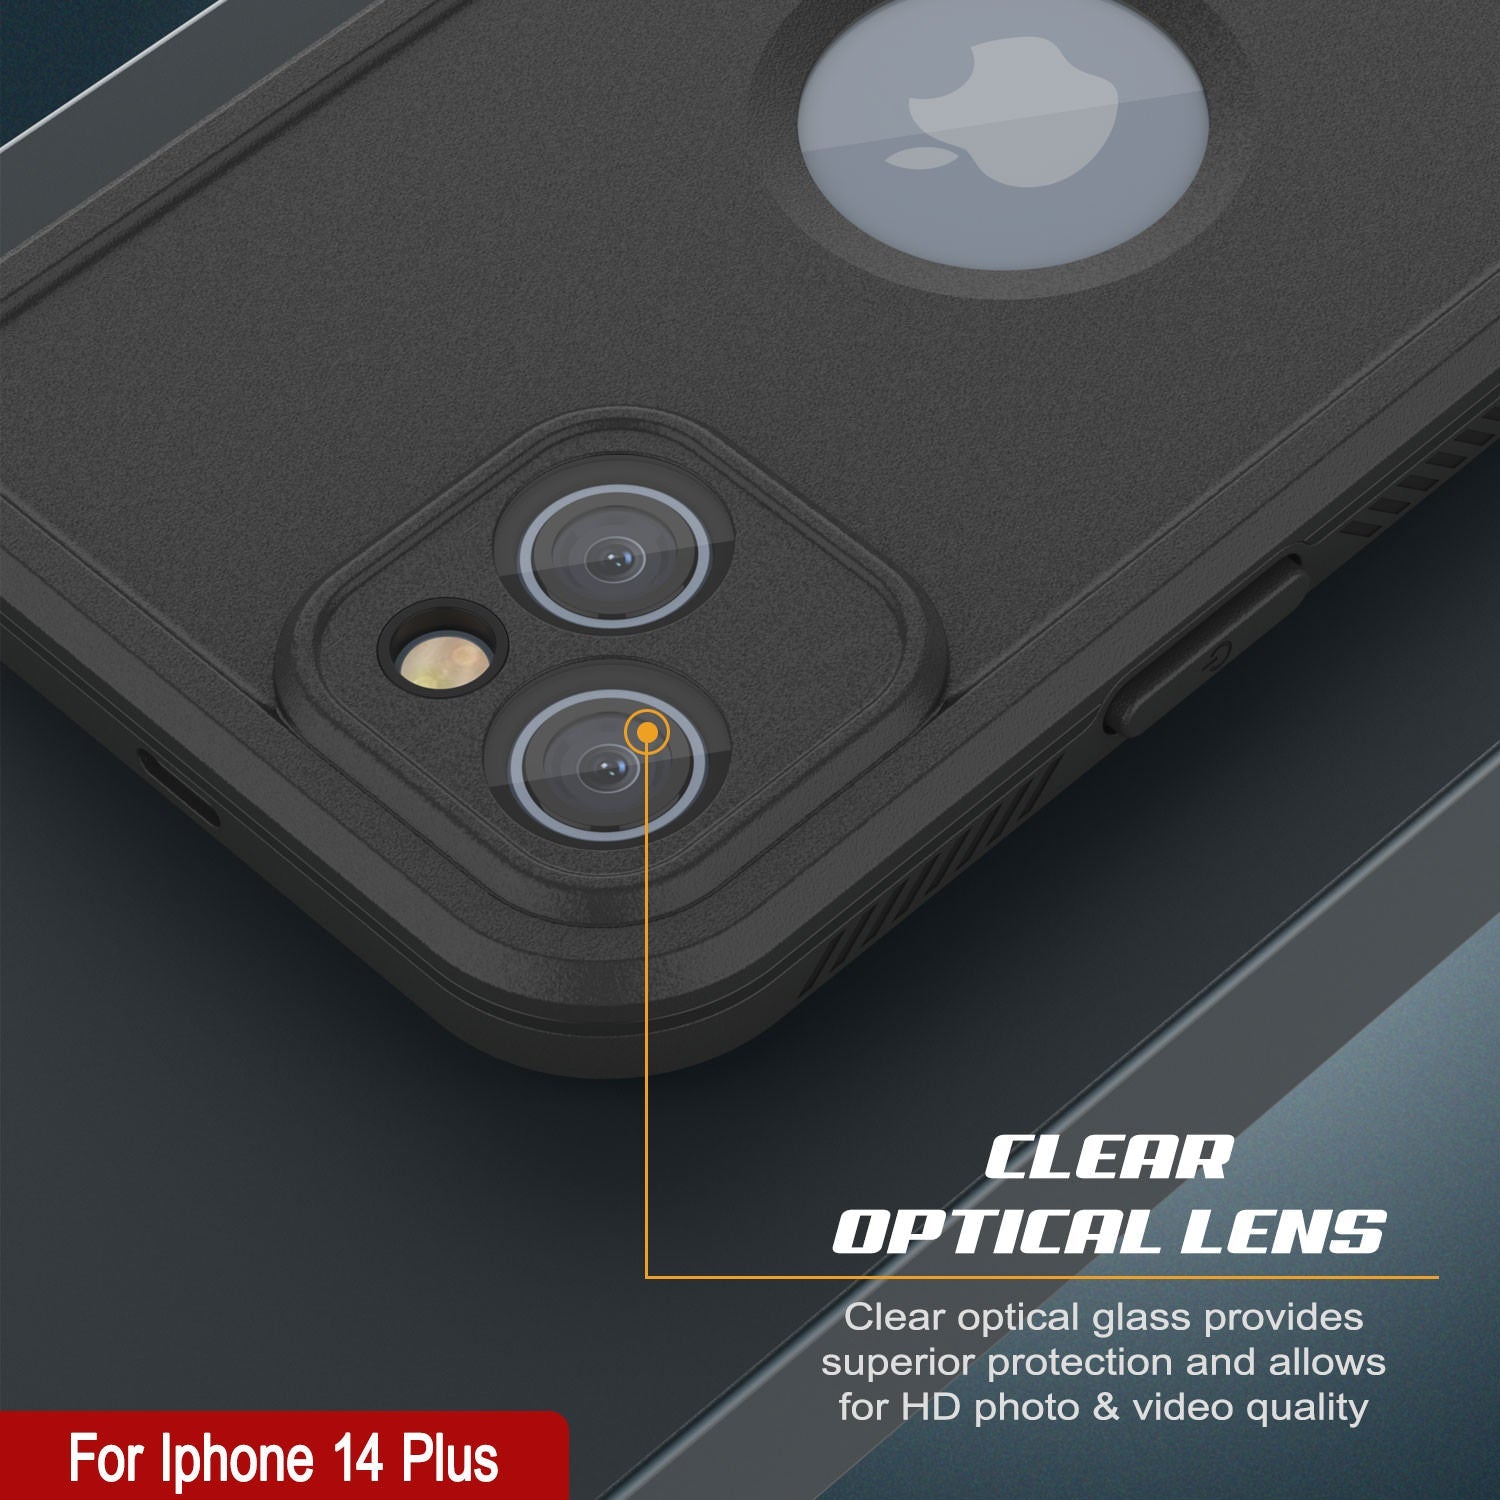 Punkcase iPhone 14 Plus Waterproof Case [Aqua Extreme Series] Armor Cover [Black]